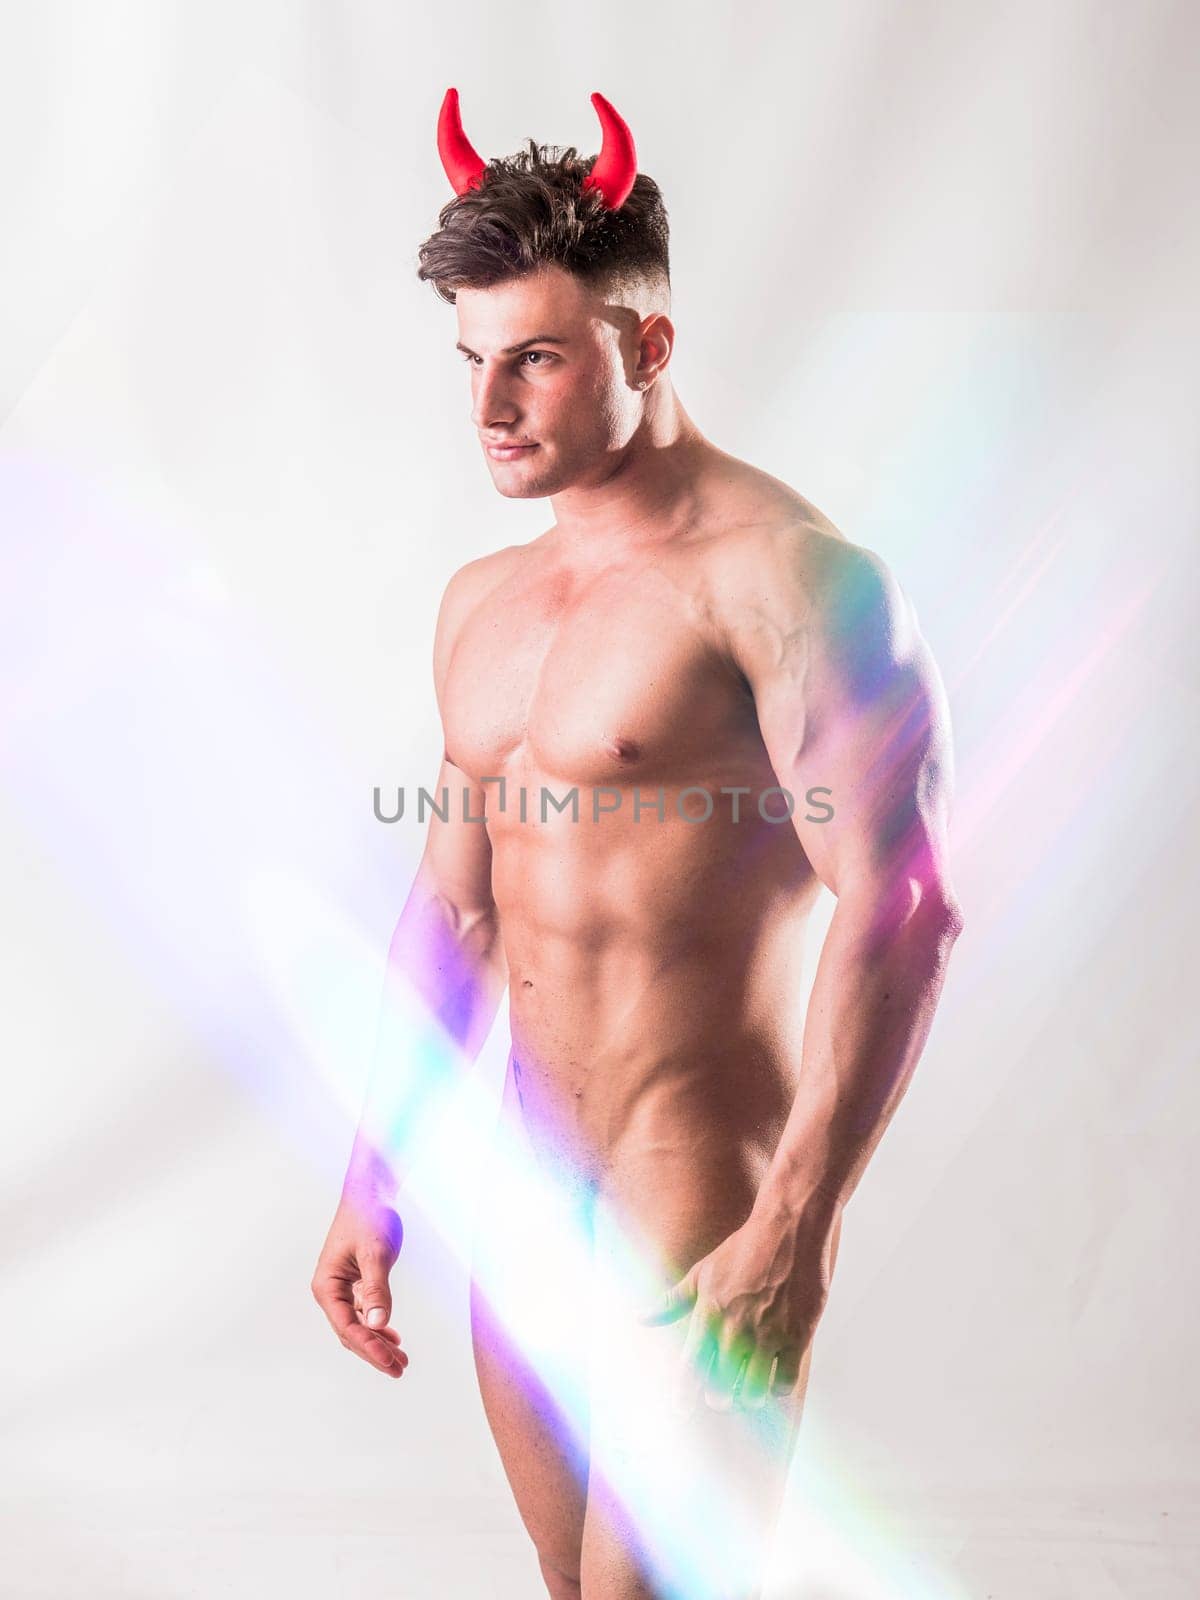 Muscular male bodybuilder totally nude, wearing devil costume horns on light background